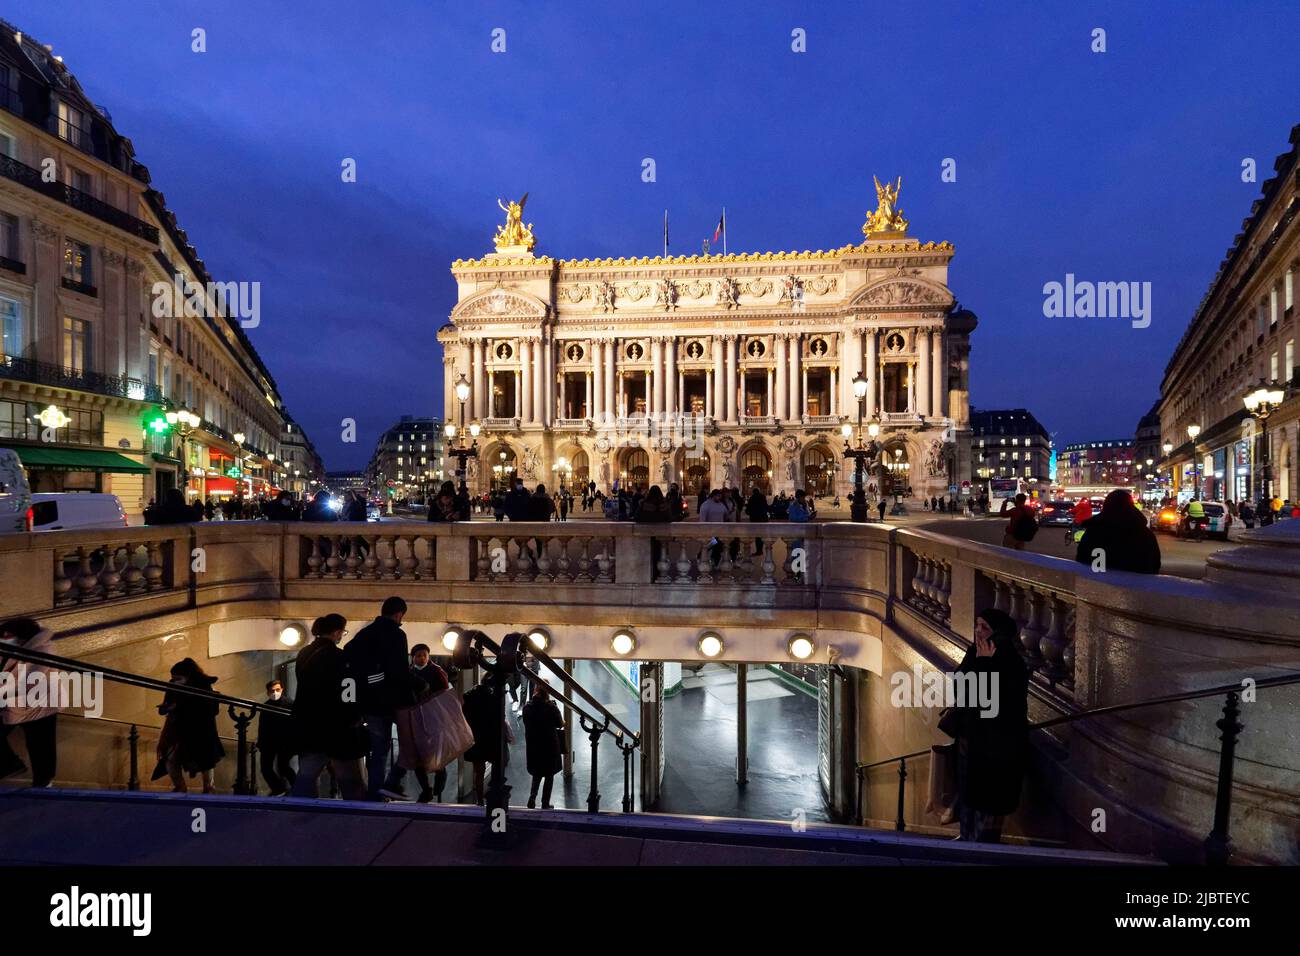 France, Paris, Garnier opera house at the entrance to the Opéra metro (subway) station Stock Photo